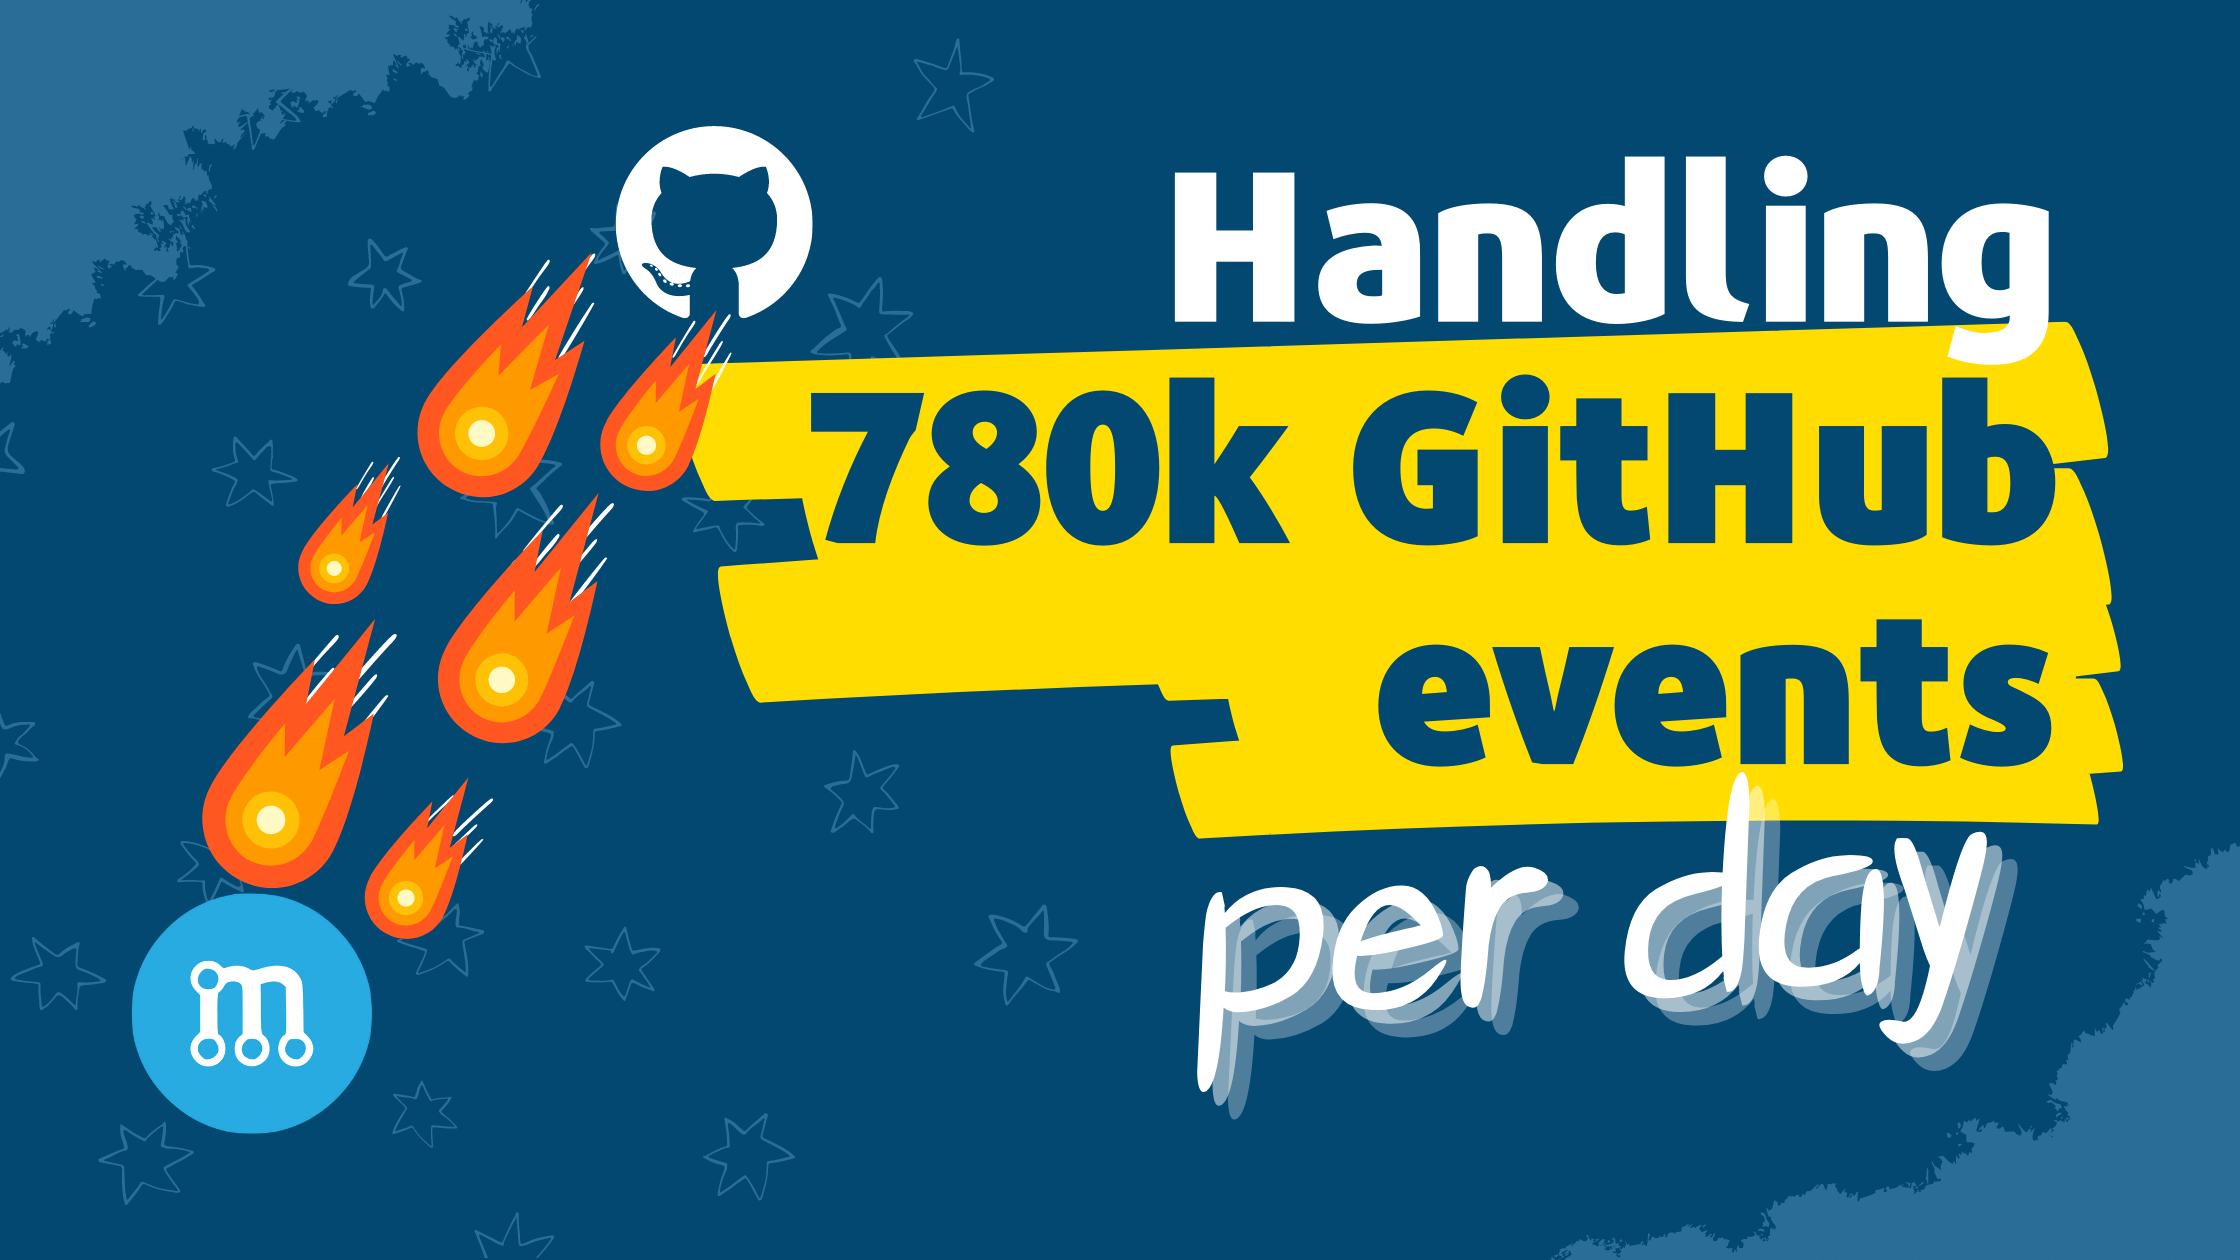 Handling 780k GitHub events per day